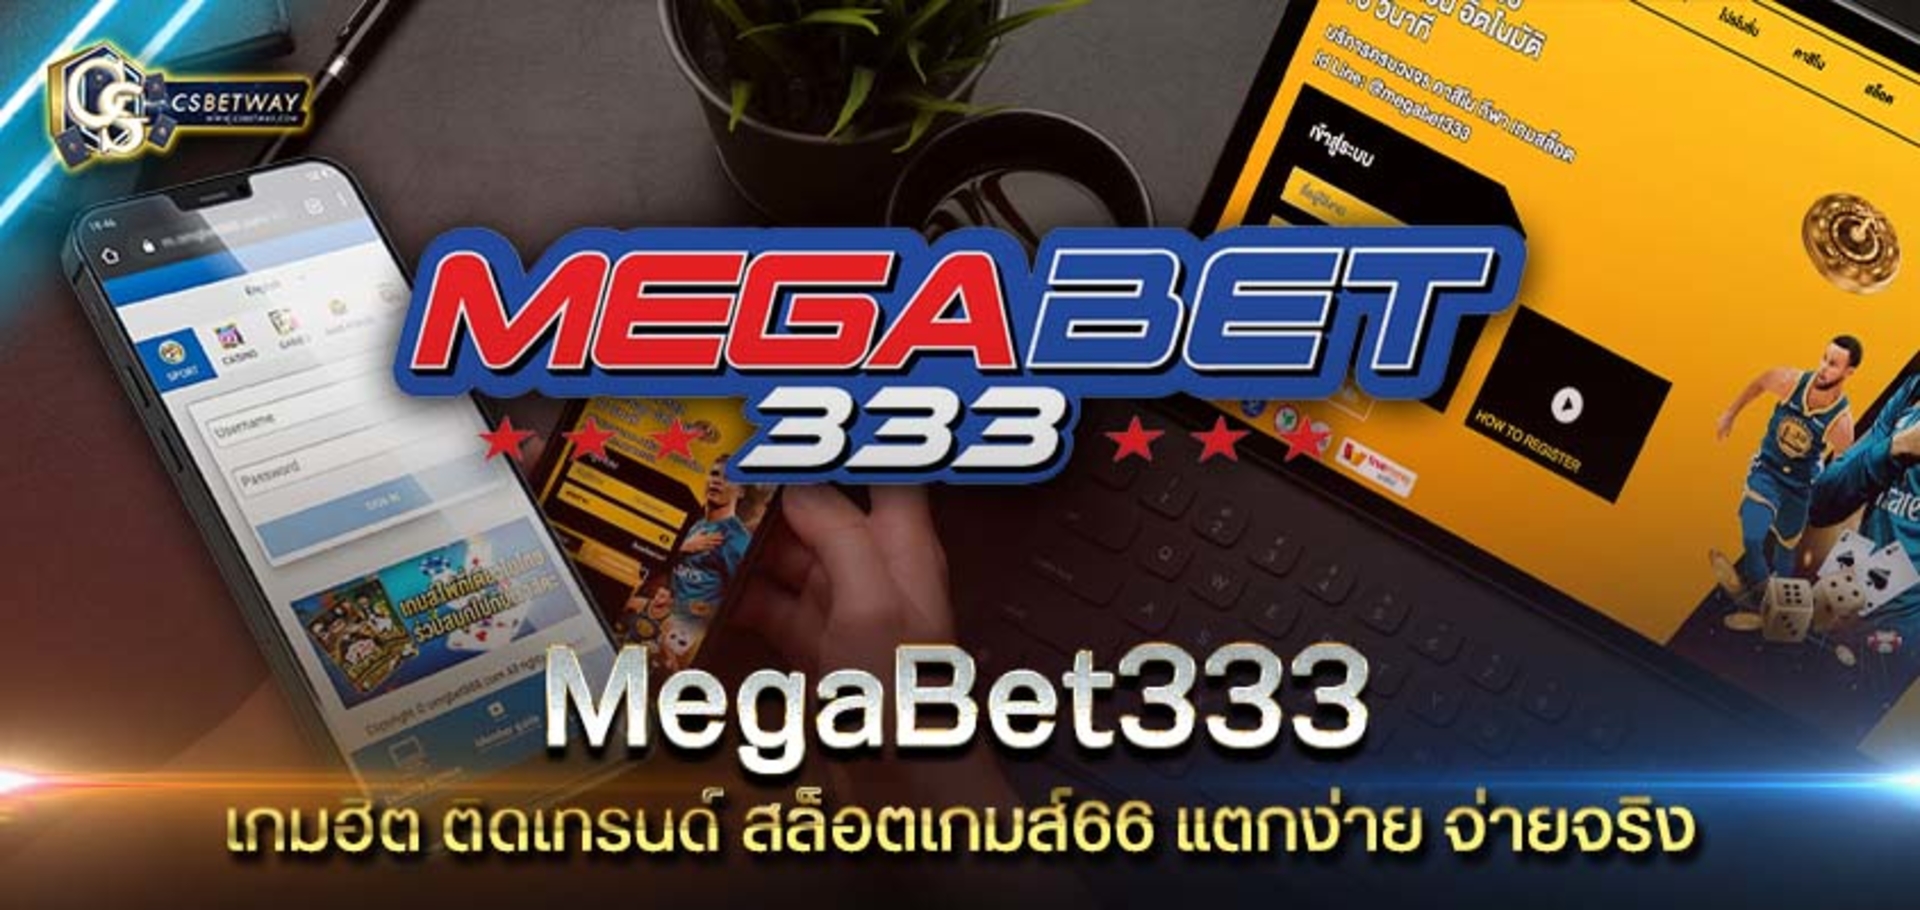 megabet333 เดิมพันรางวัลใหญ่ กับเว็บเกมคุณภาพ เล่นได้เงินชัวร์ 100%